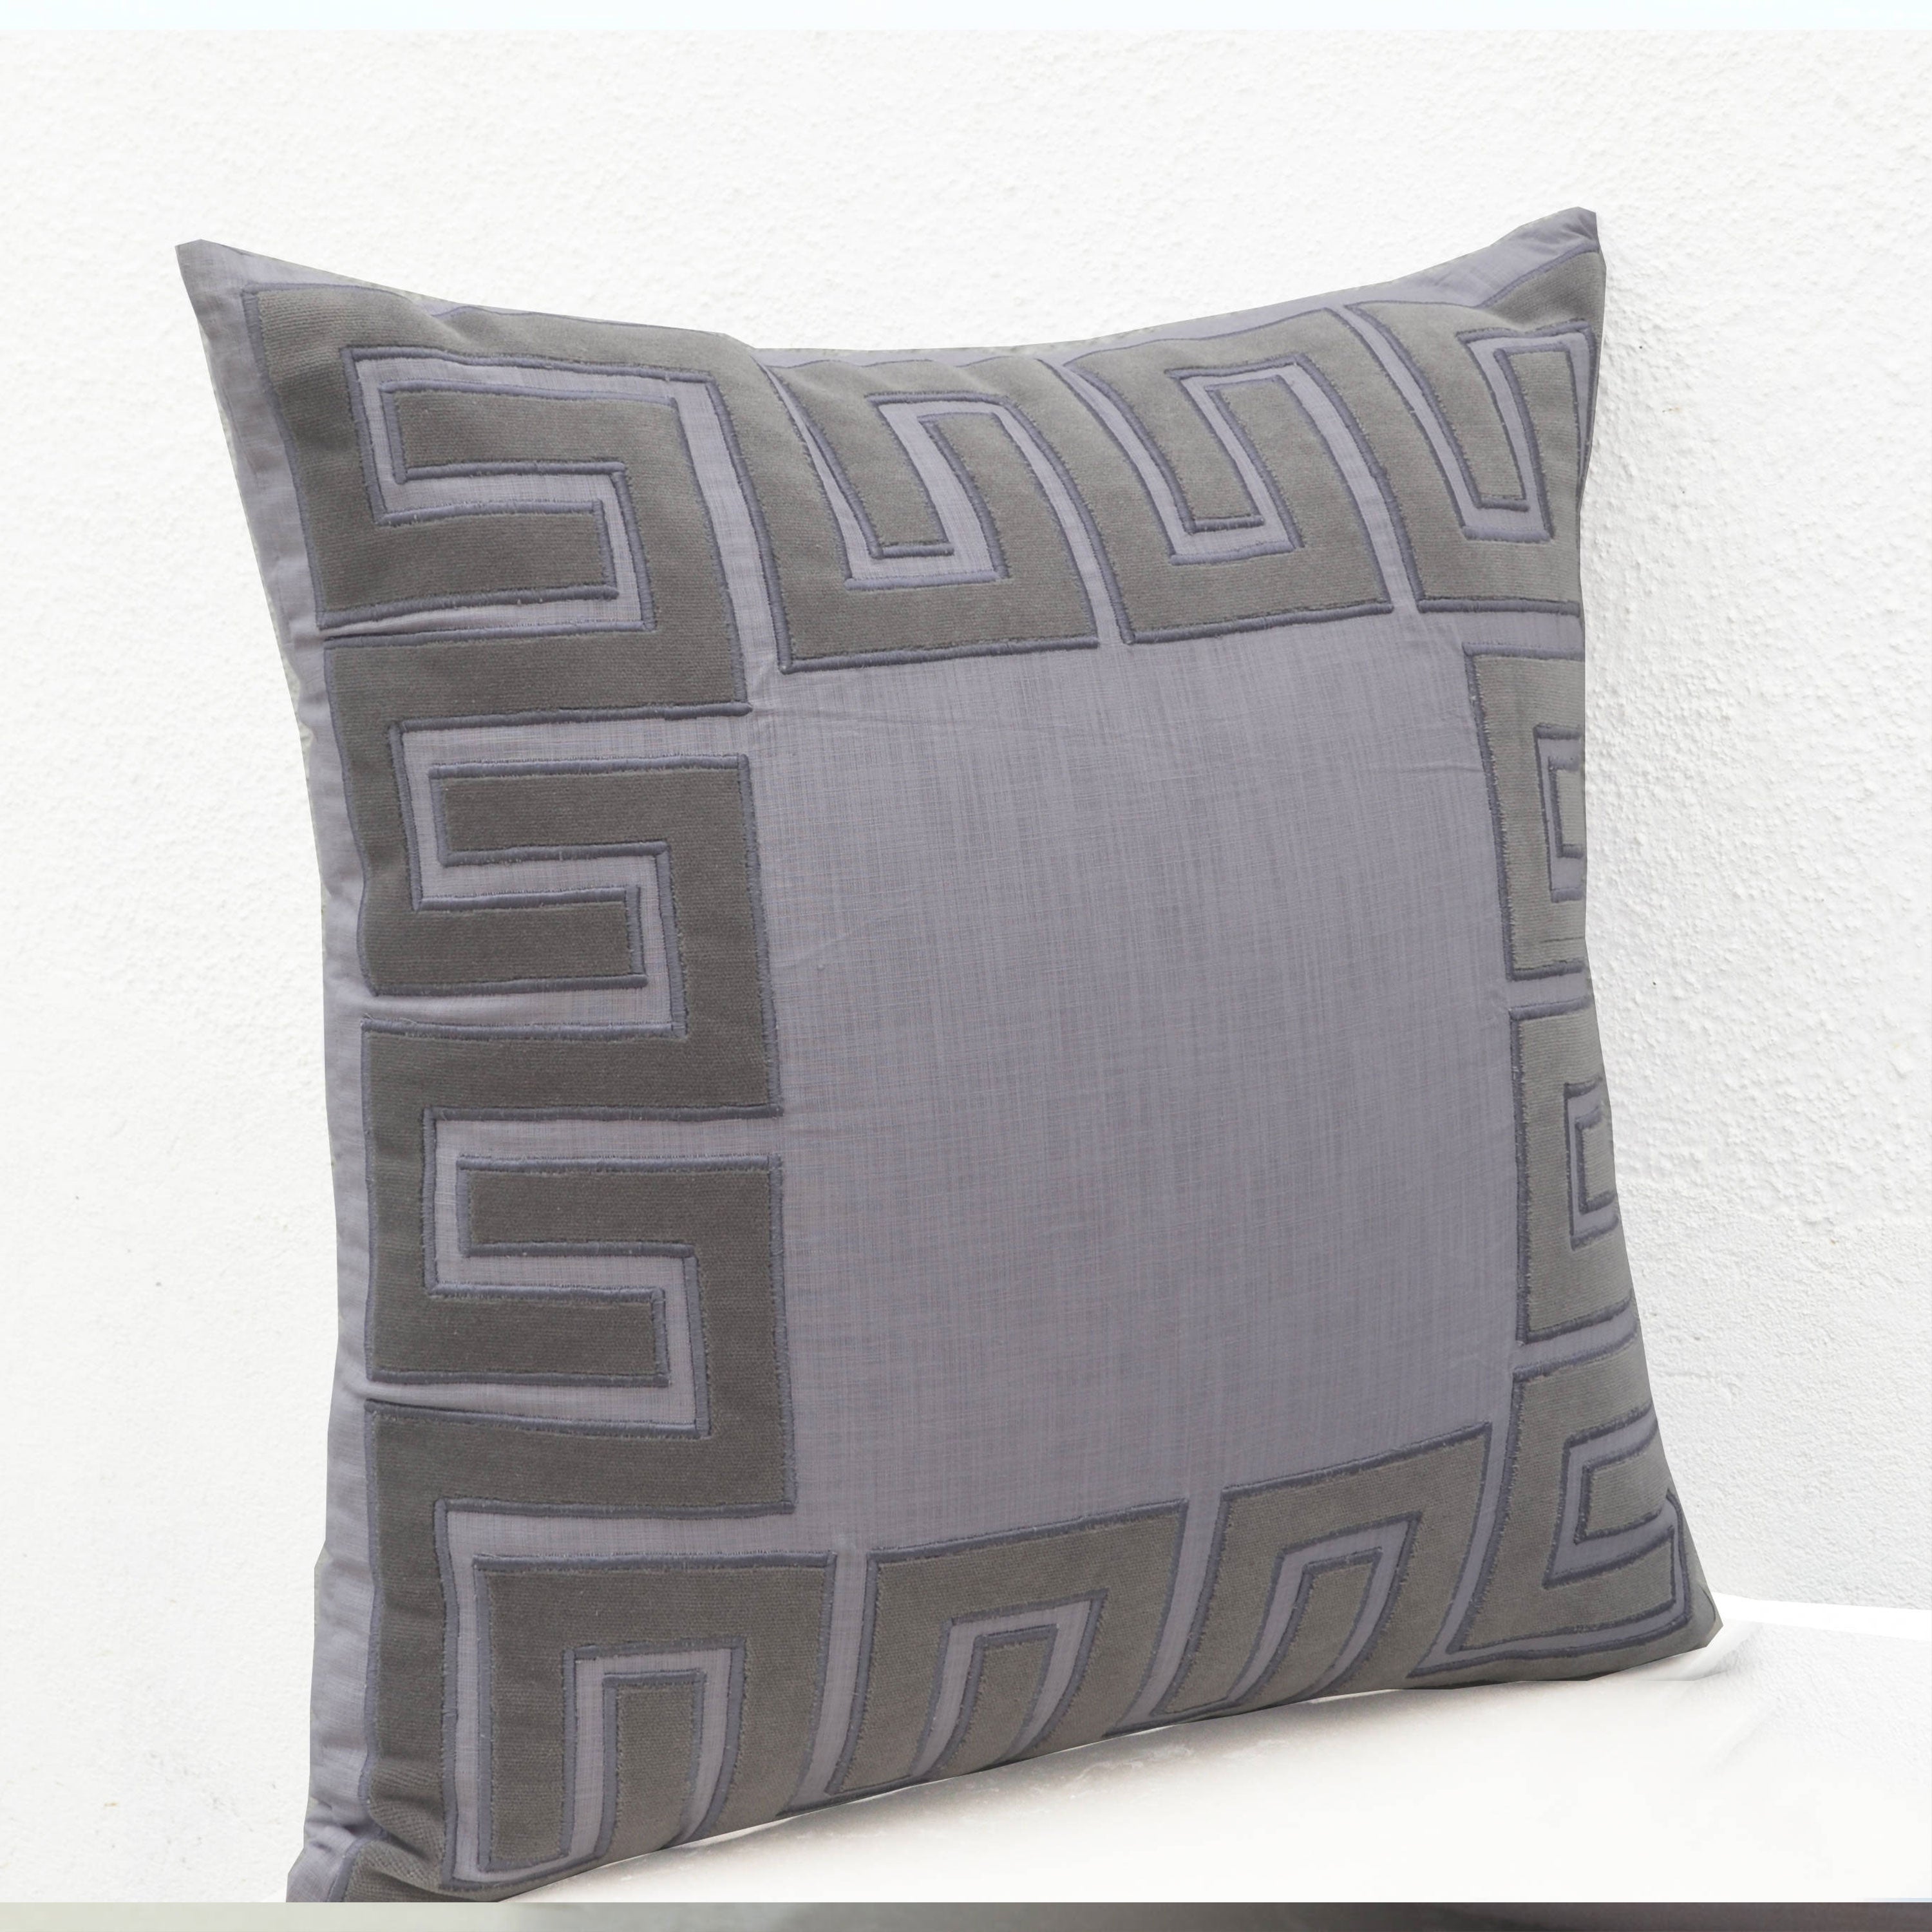 Greek Key Linen Throw Pillow Cover, Velvet Applique Gray Pillow Case